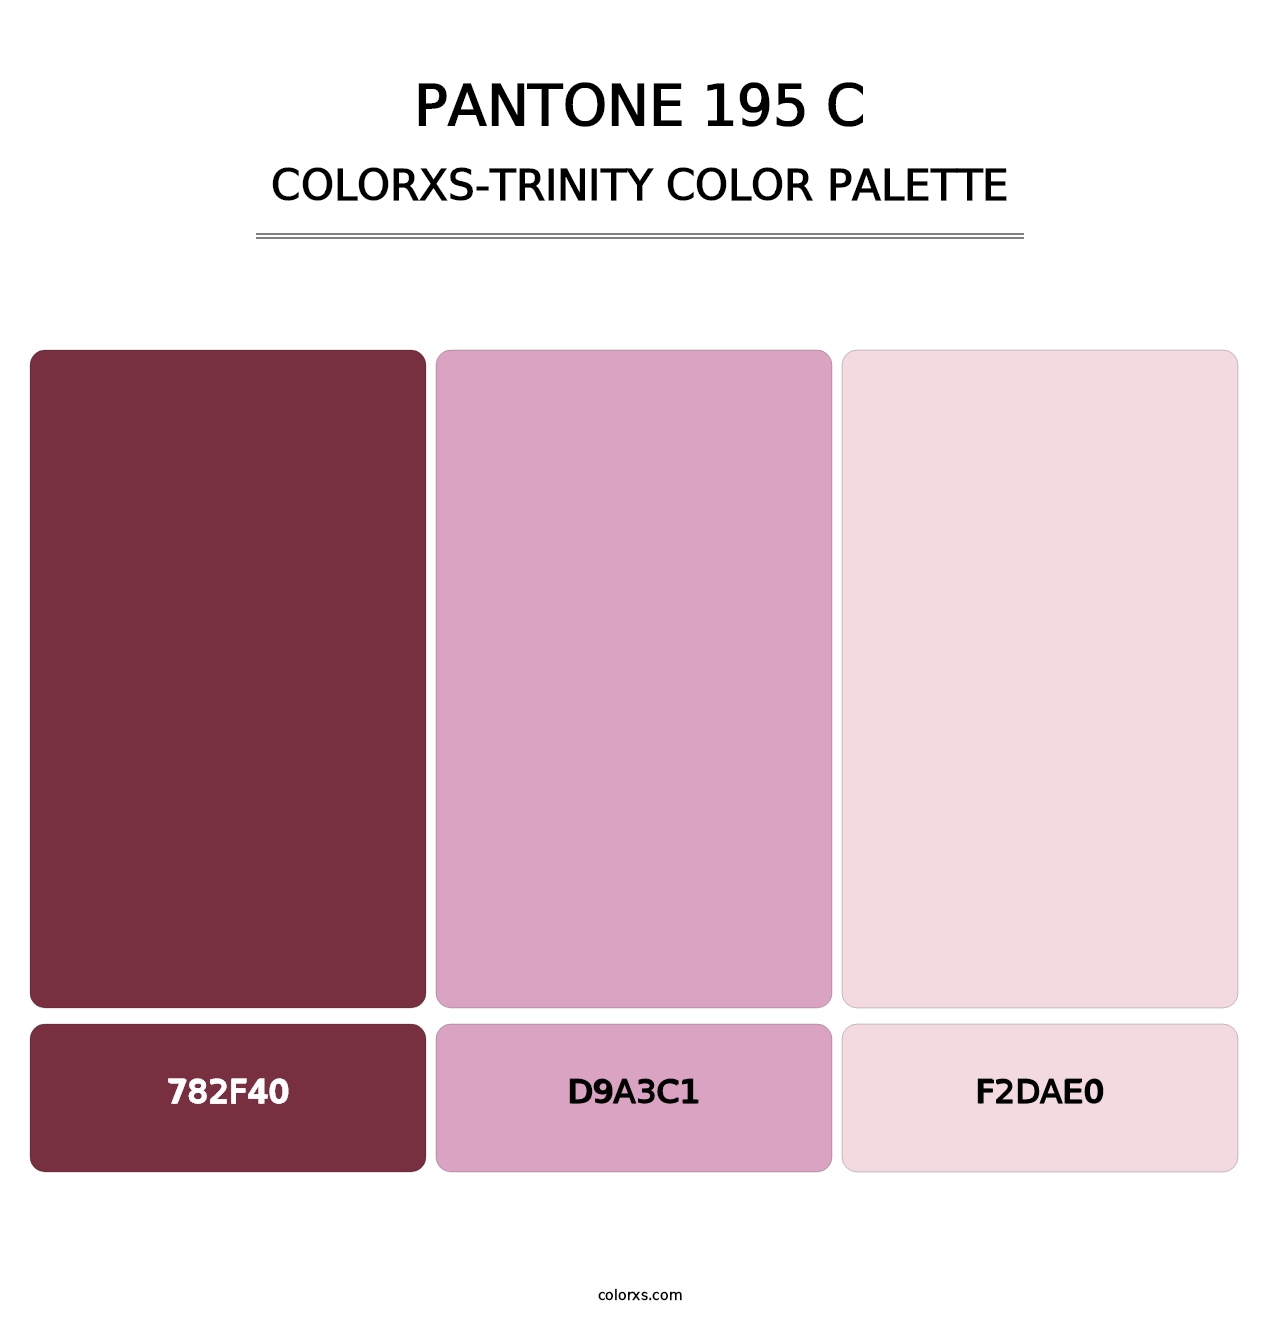 PANTONE 195 C - Colorxs Trinity Palette